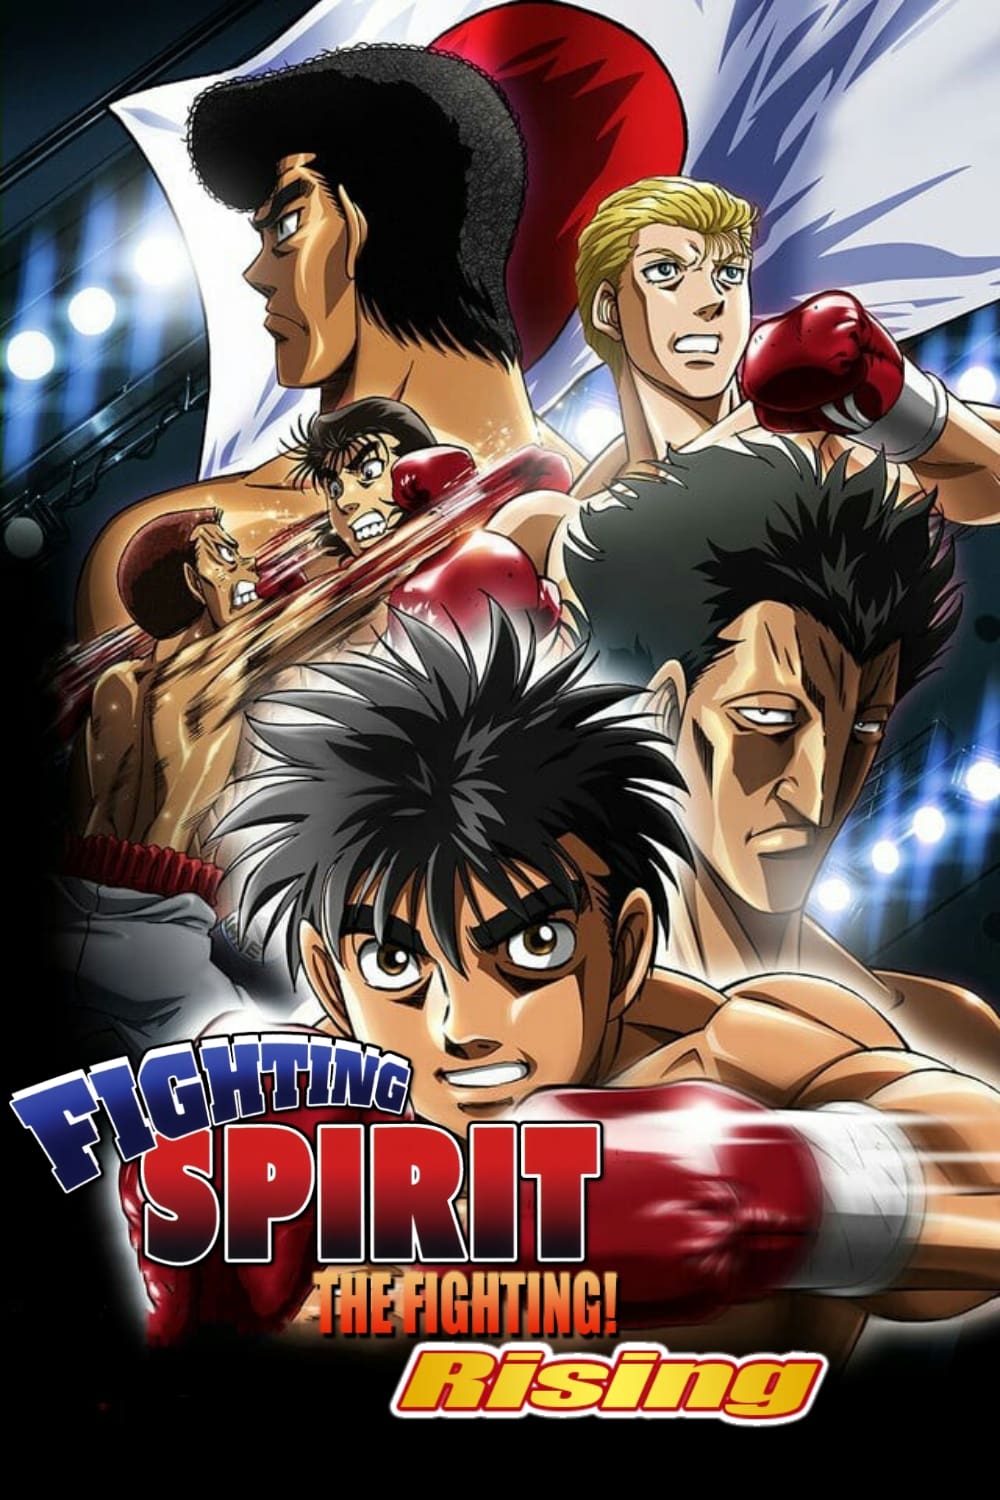 Fighting Spirit: Champion Road (2003) - Plex